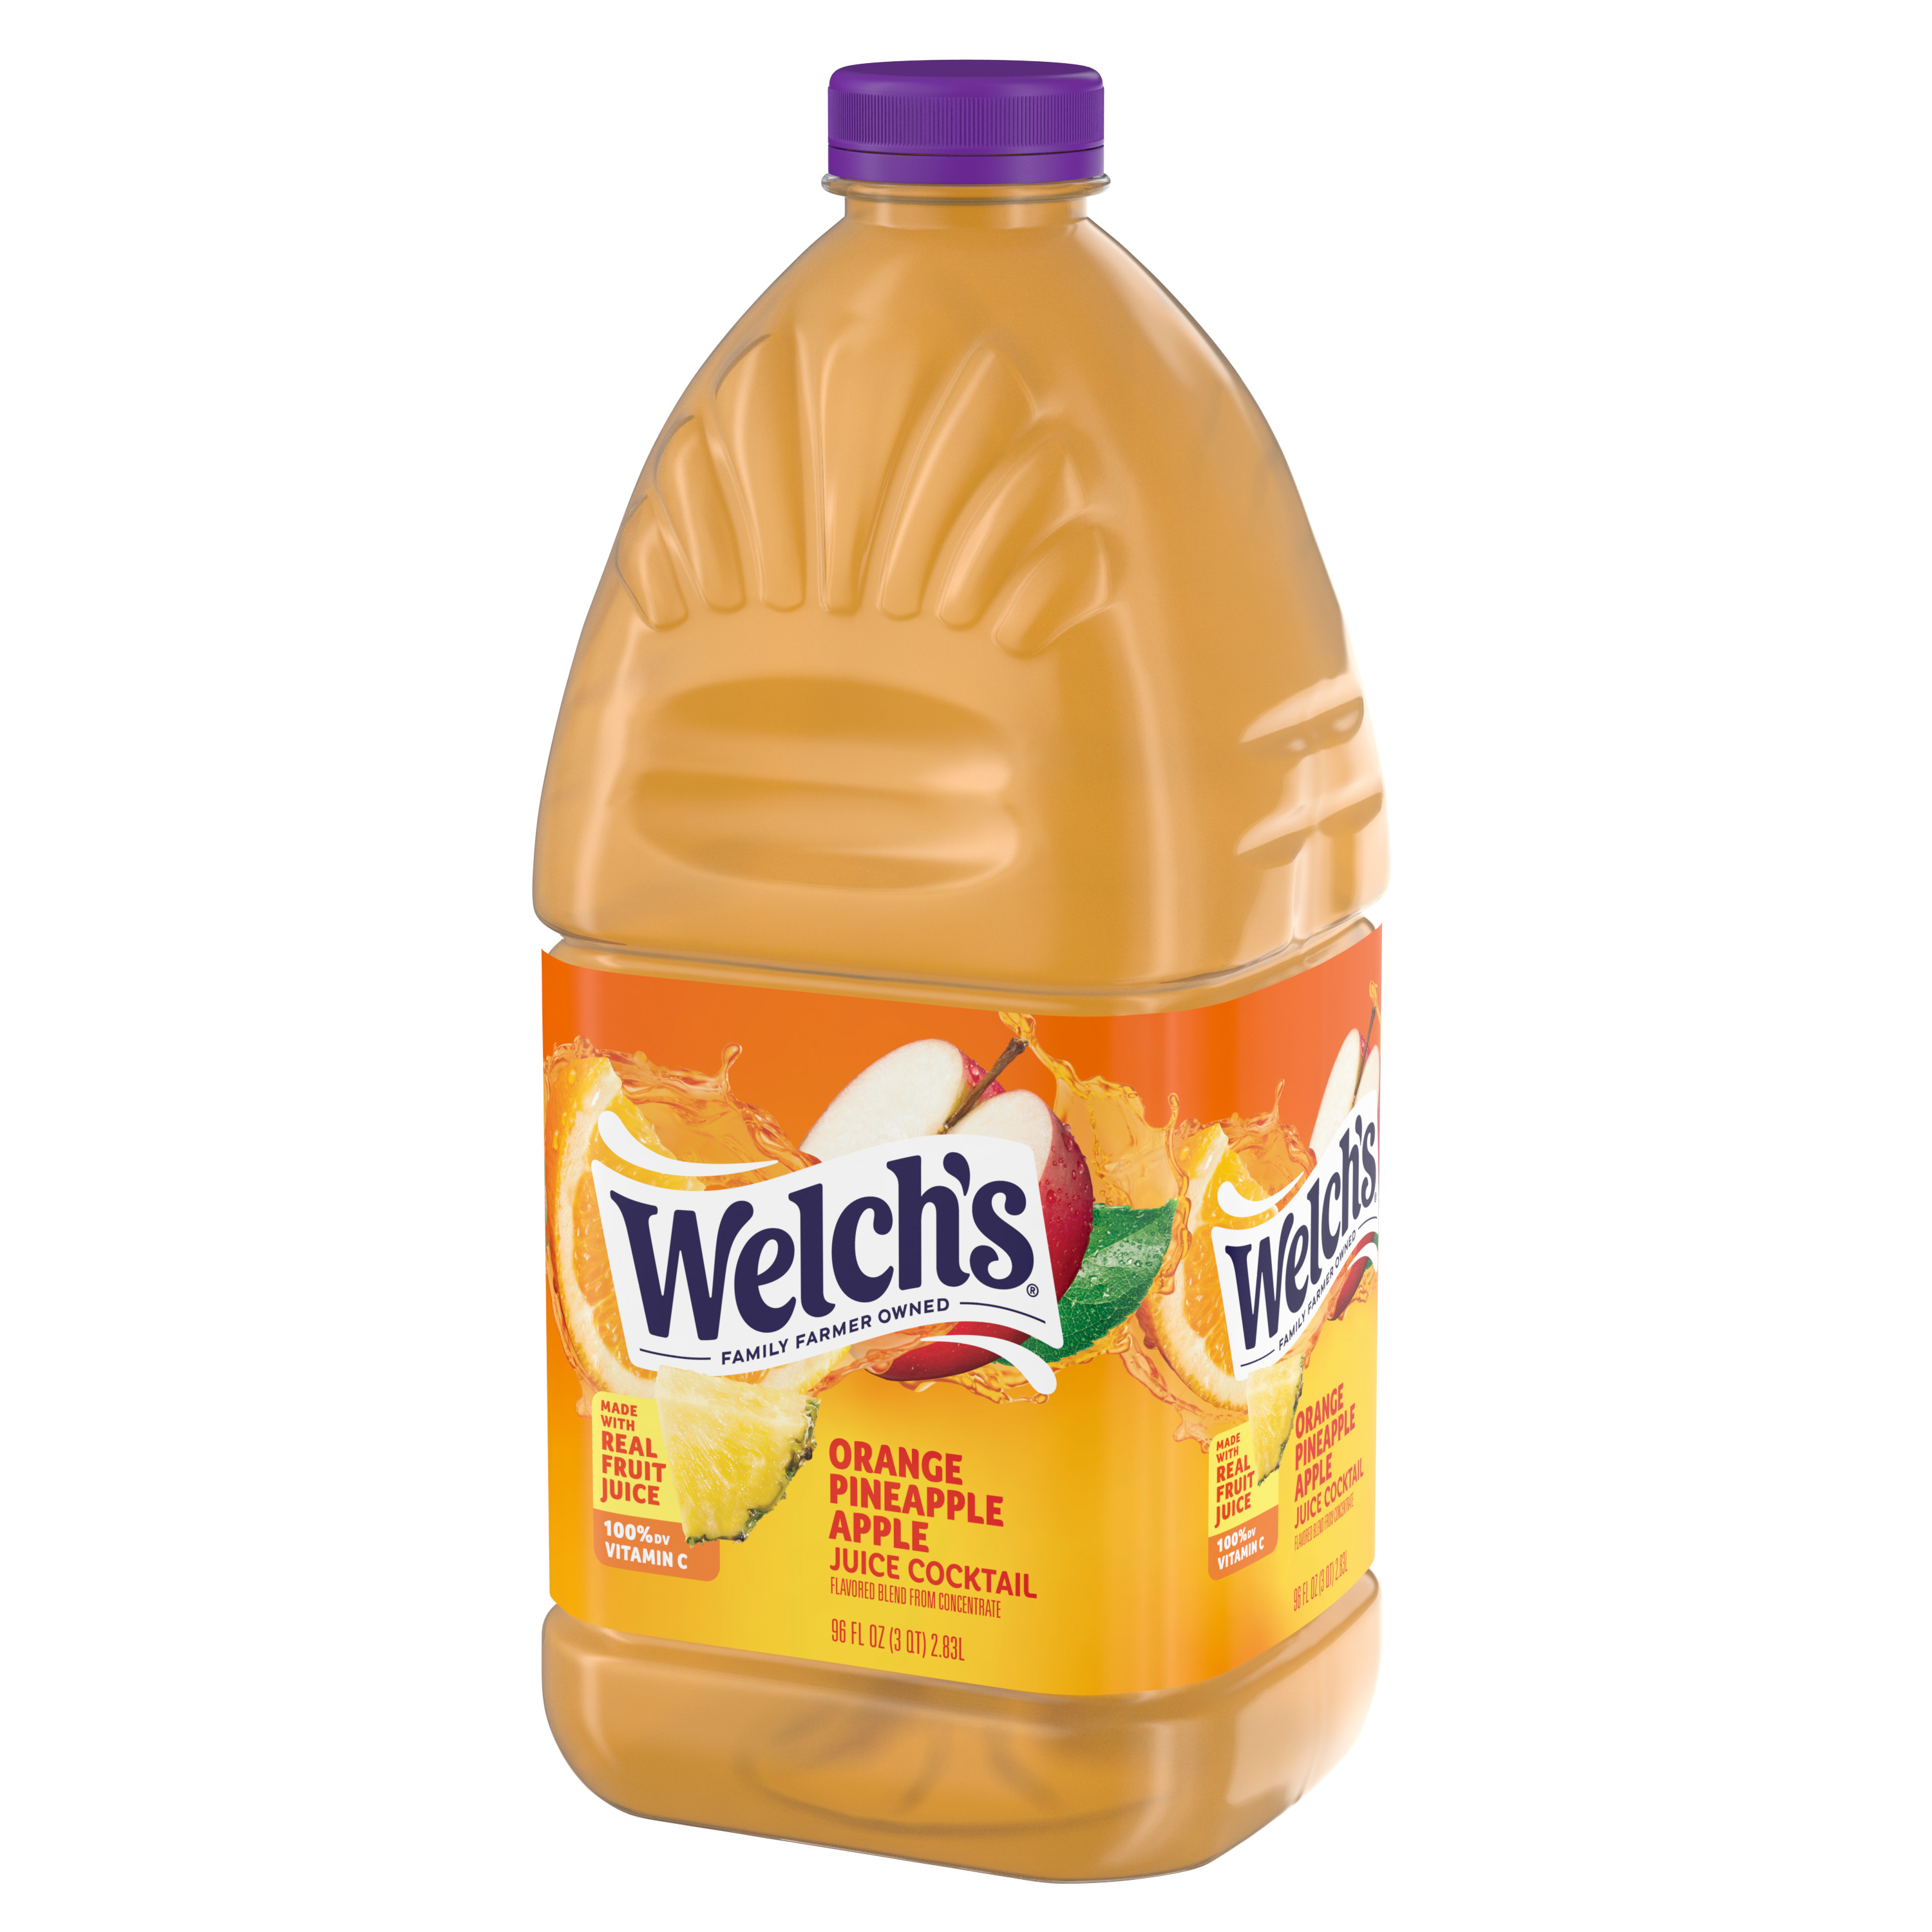 Welch's Orange Pineapple Apple Juice Cocktail, 96 fl oz Bottle - image 2 of 8